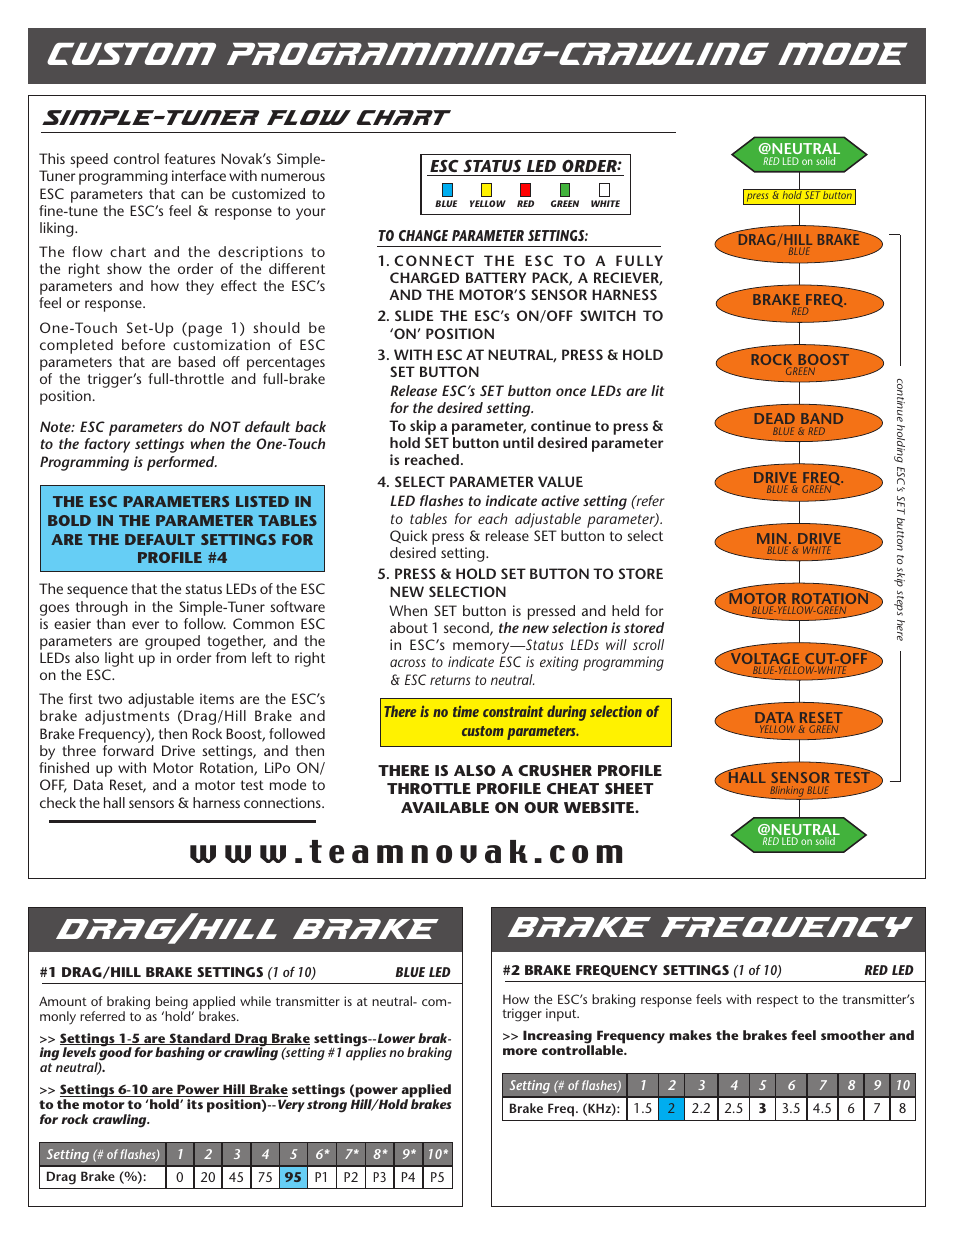 Custom programming-crawling mode, Drag/hill brake, Brake frequency | Novak  Brushless Speed Control: Crusher Field Guide (Crawler Mode) ---  Simple-Tuner Version ESC (4) User Manual | Page 2 / 4